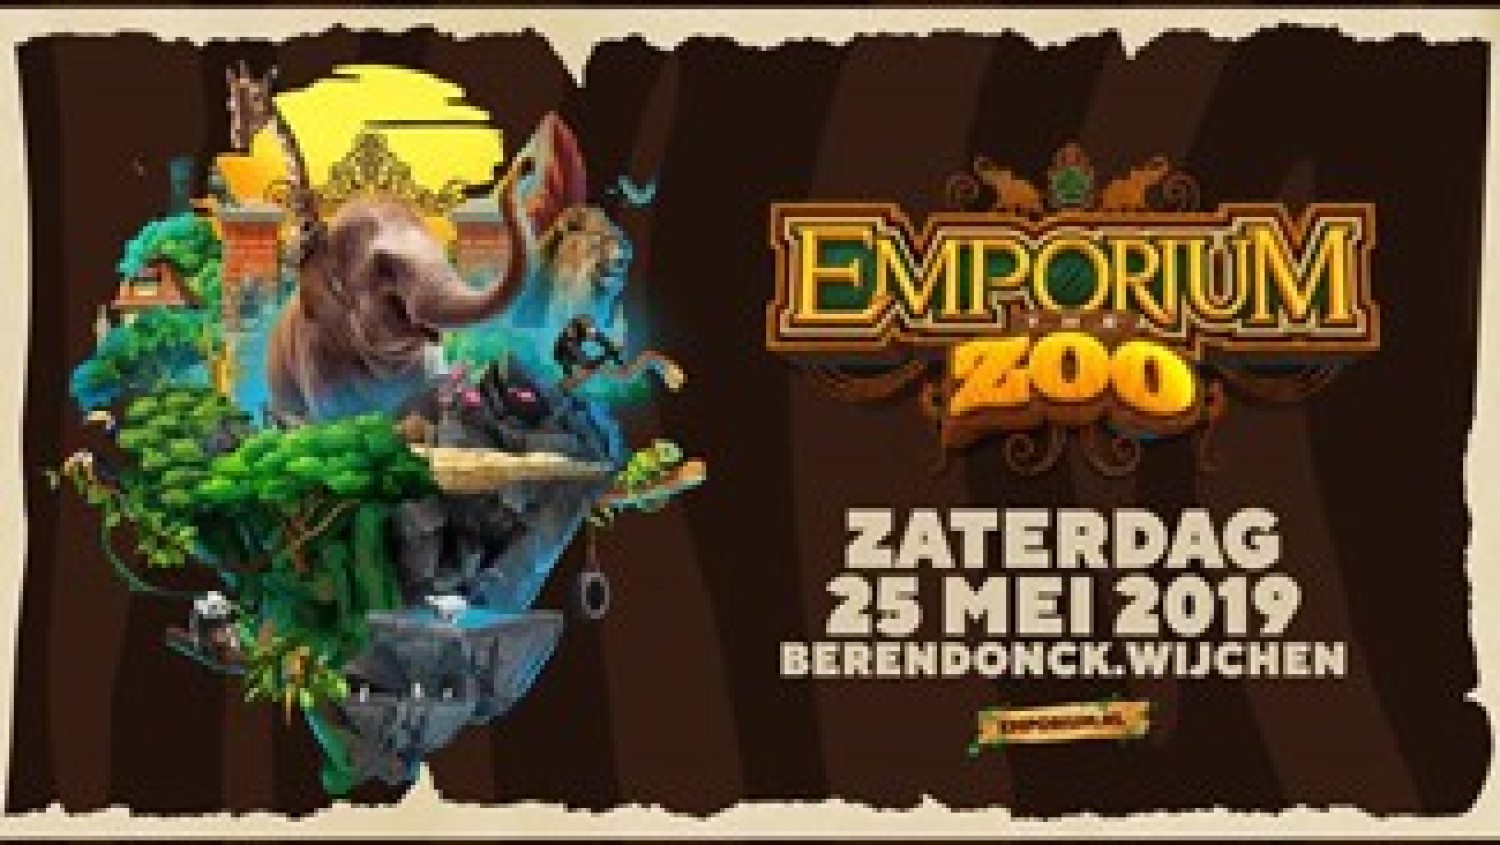 Party nieuws: Emporium The Zoo presenteert timetable